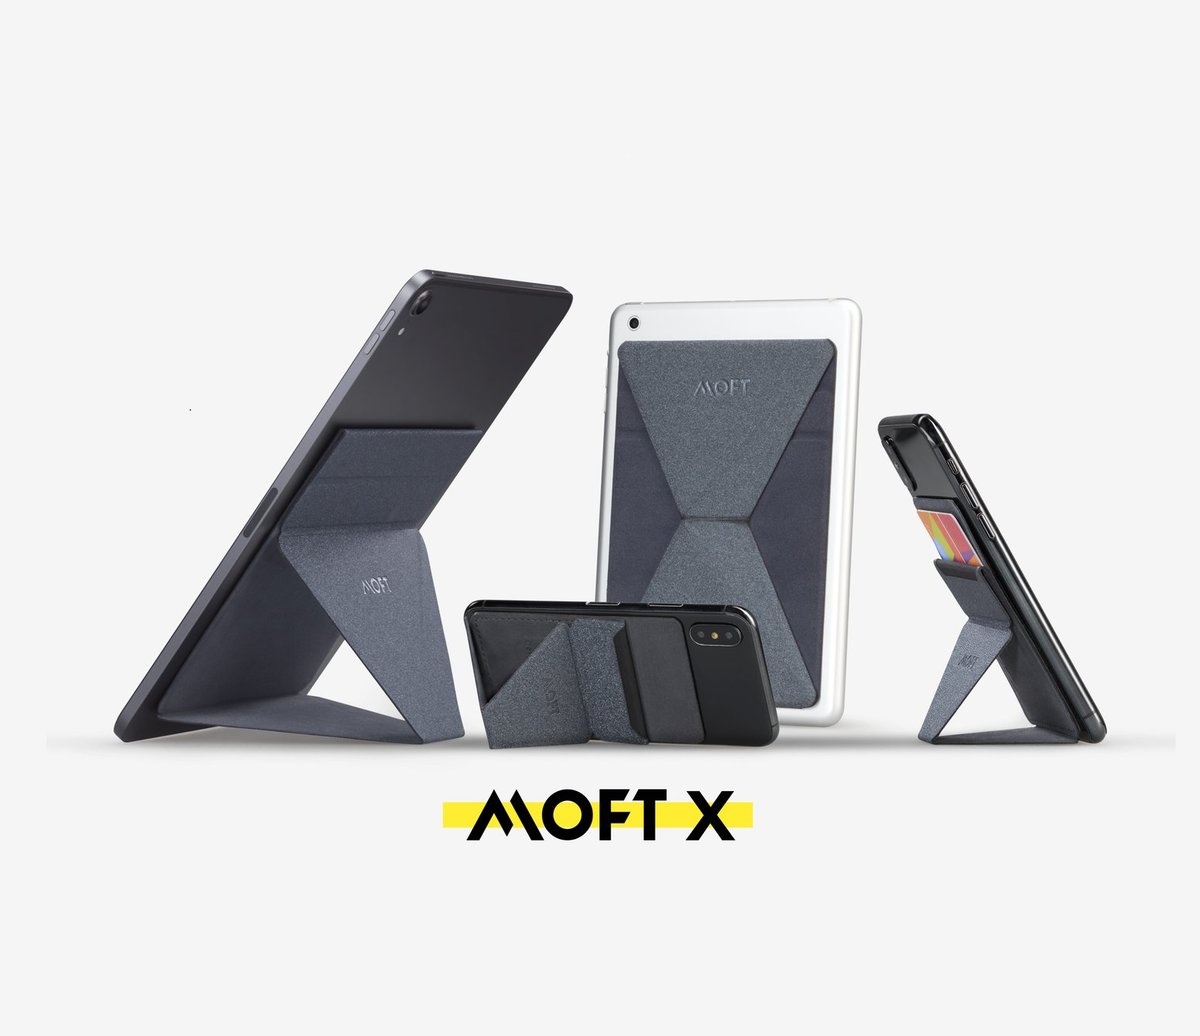 MOFT - 美國 MOFT X - 可摺式隱形支架 - 小型平板電腦 (7.9")